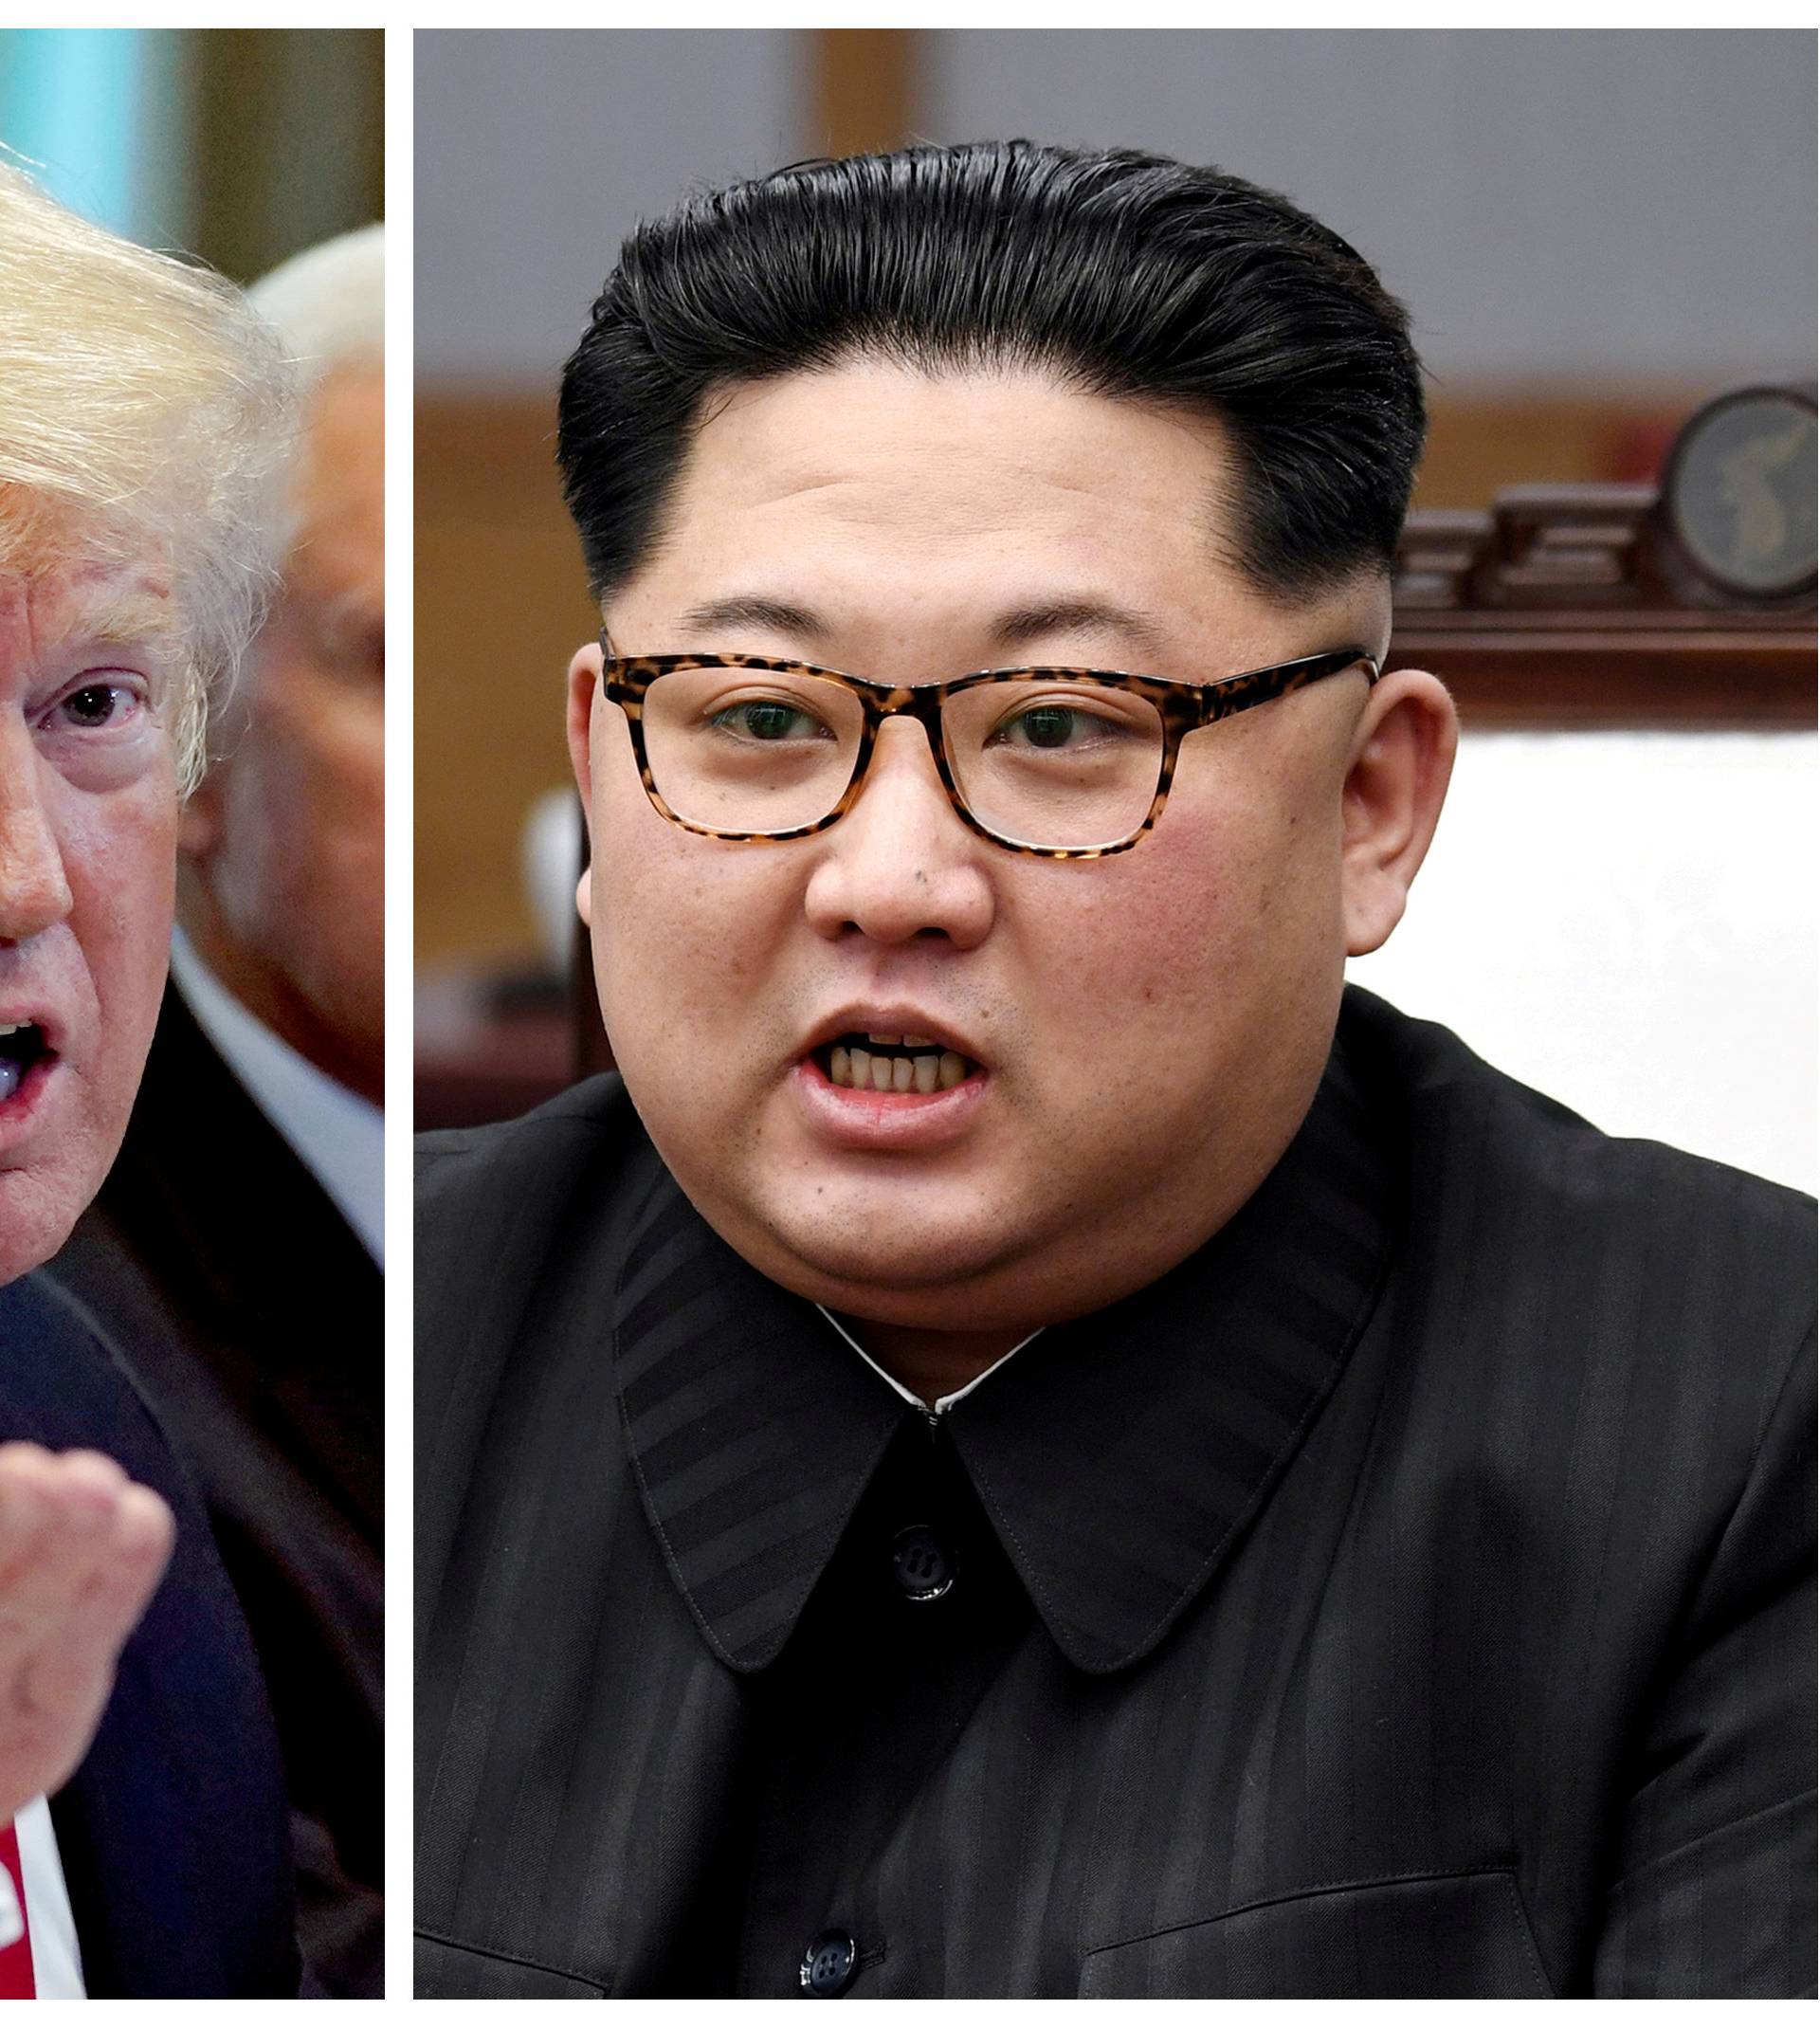 FILE PHOTO: A combination photo shows U.S.  President Donald Trump and North Korean leader Kim Jong Un